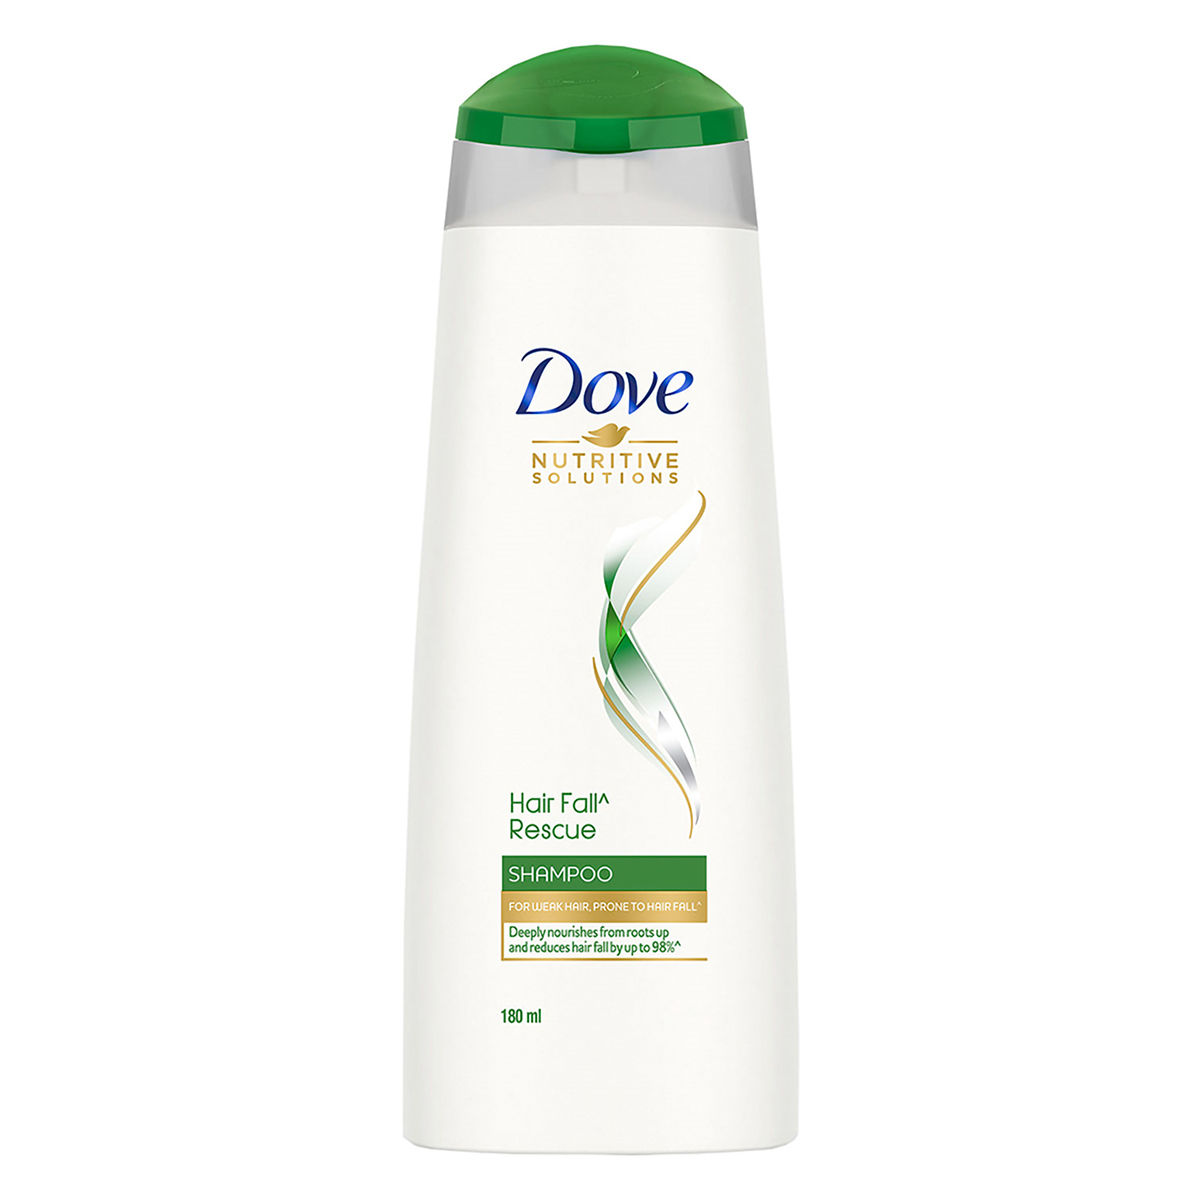 Buy Dove Hair Fall Rescue Shampoo, 180 ml Online